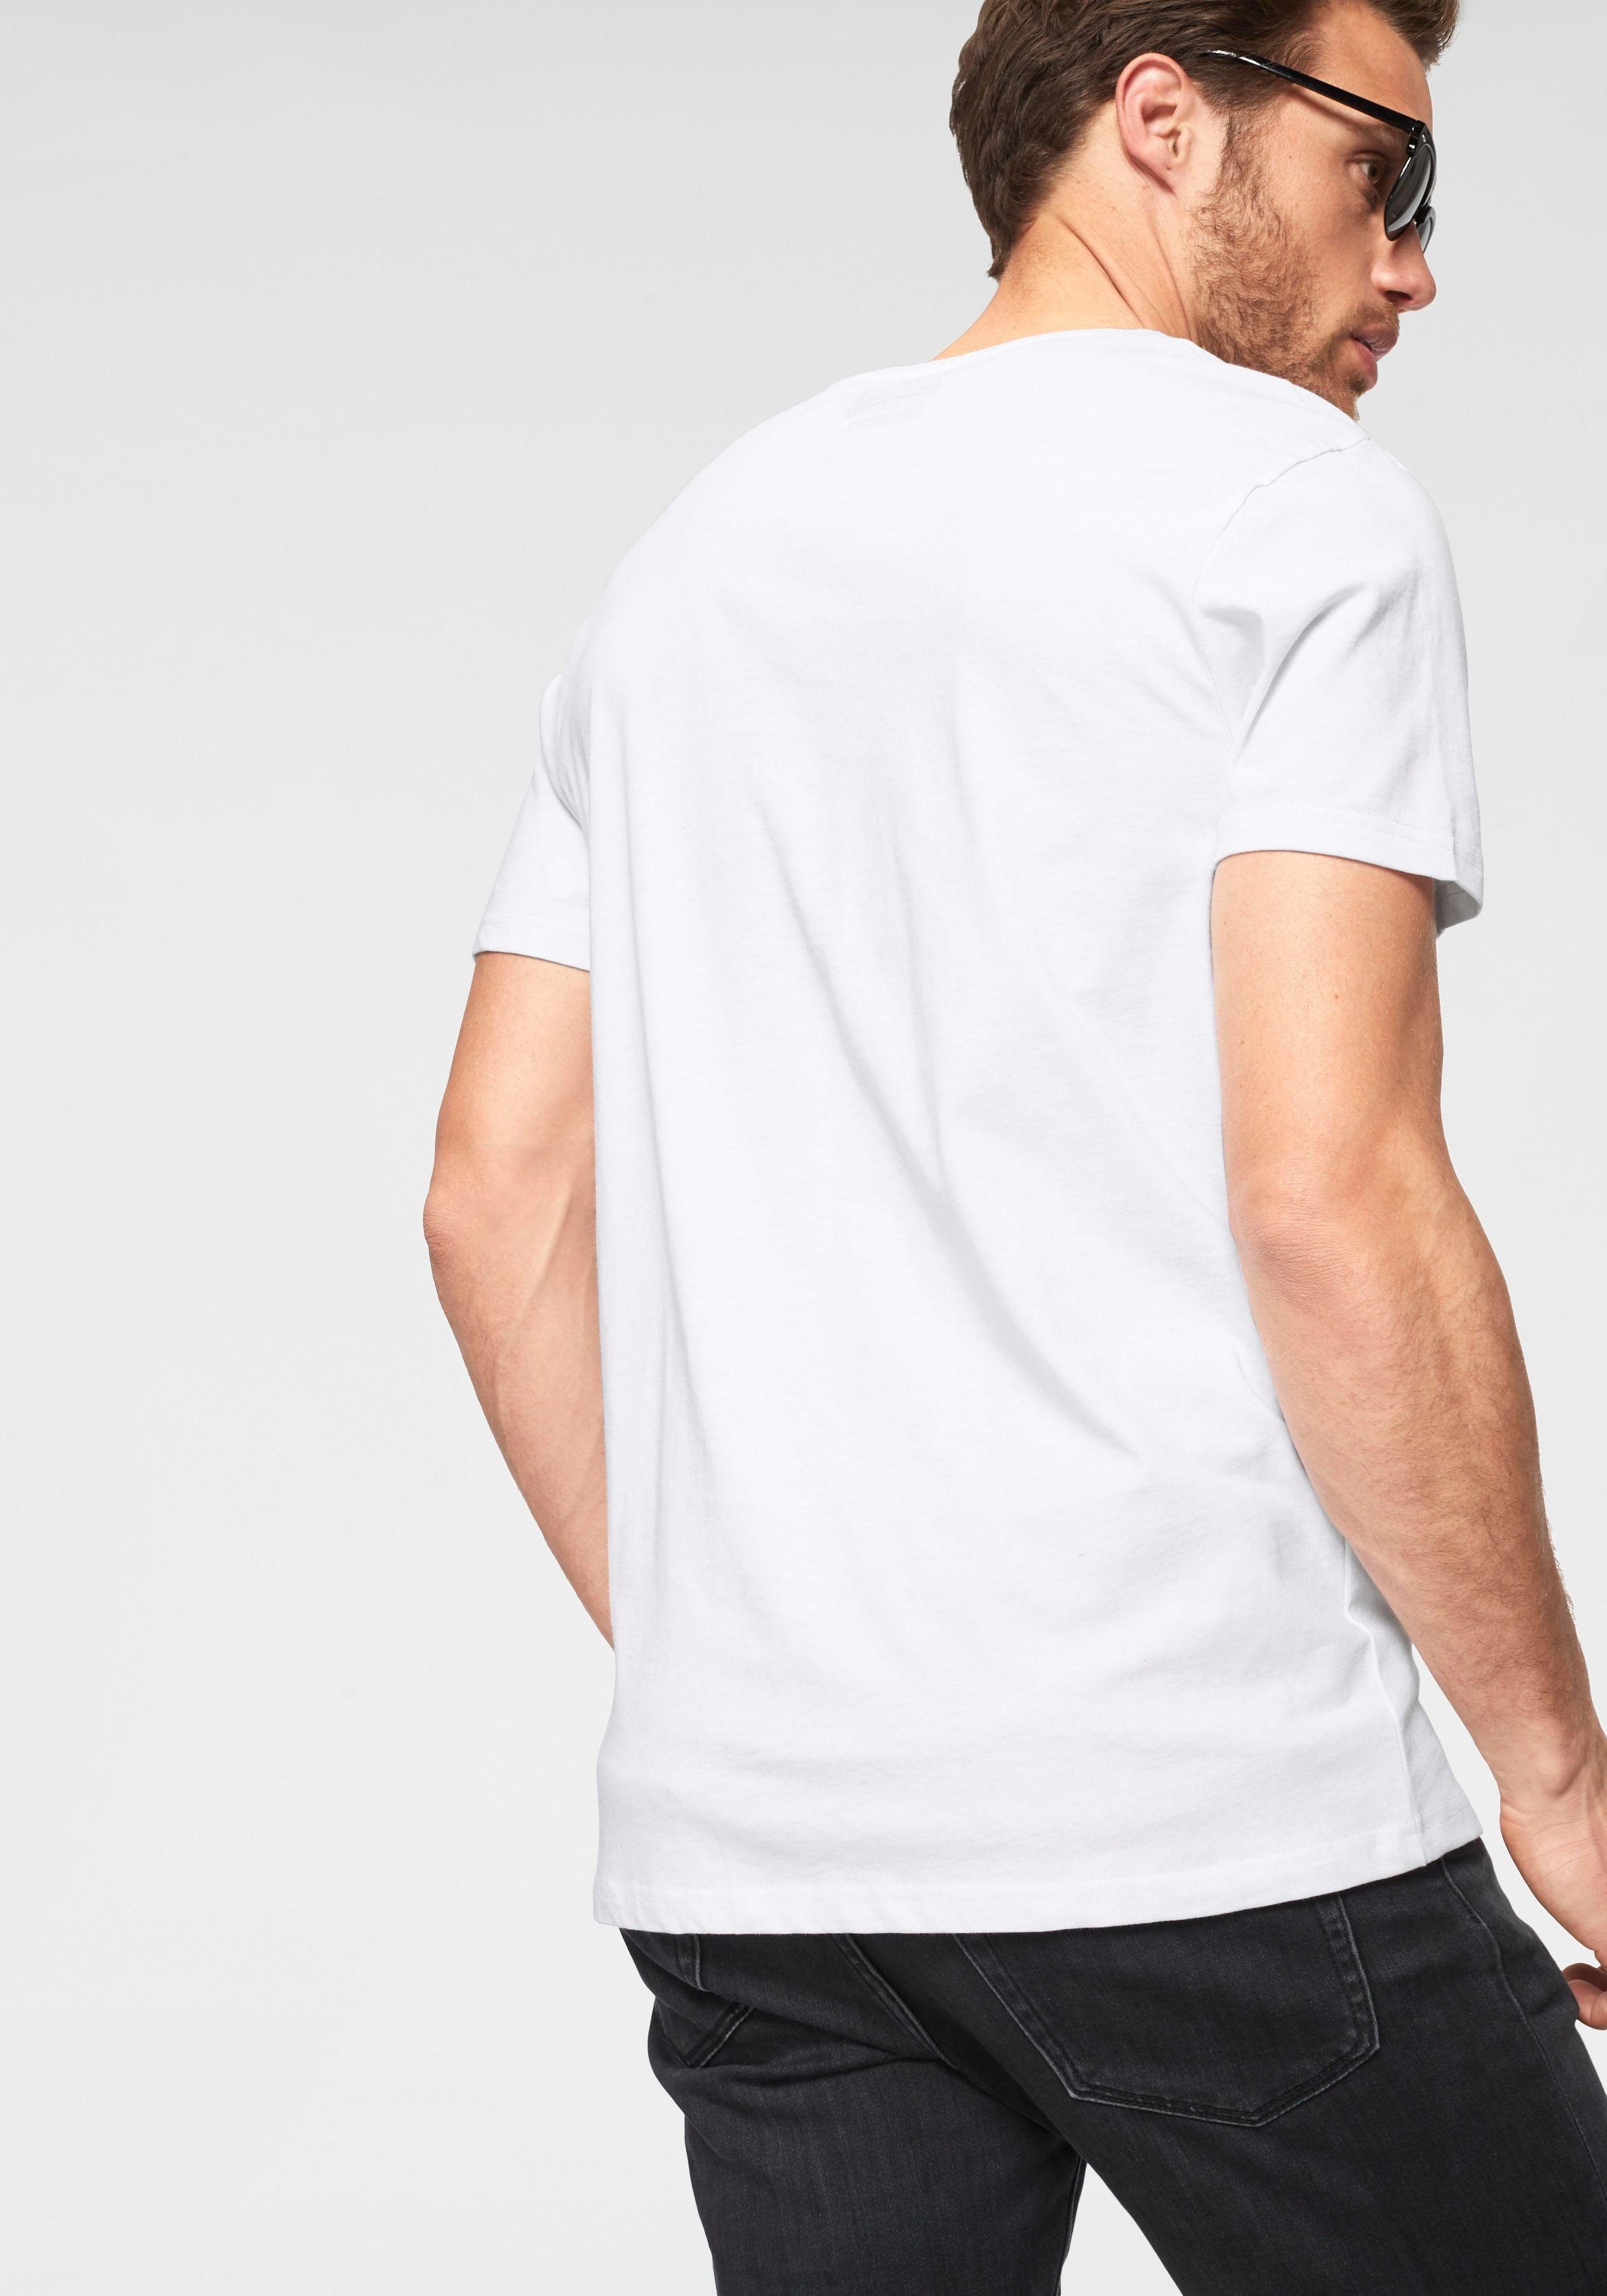 White/Black BYLCHAN T-Shirt 2er-Pack) (Packung, Lonsdale